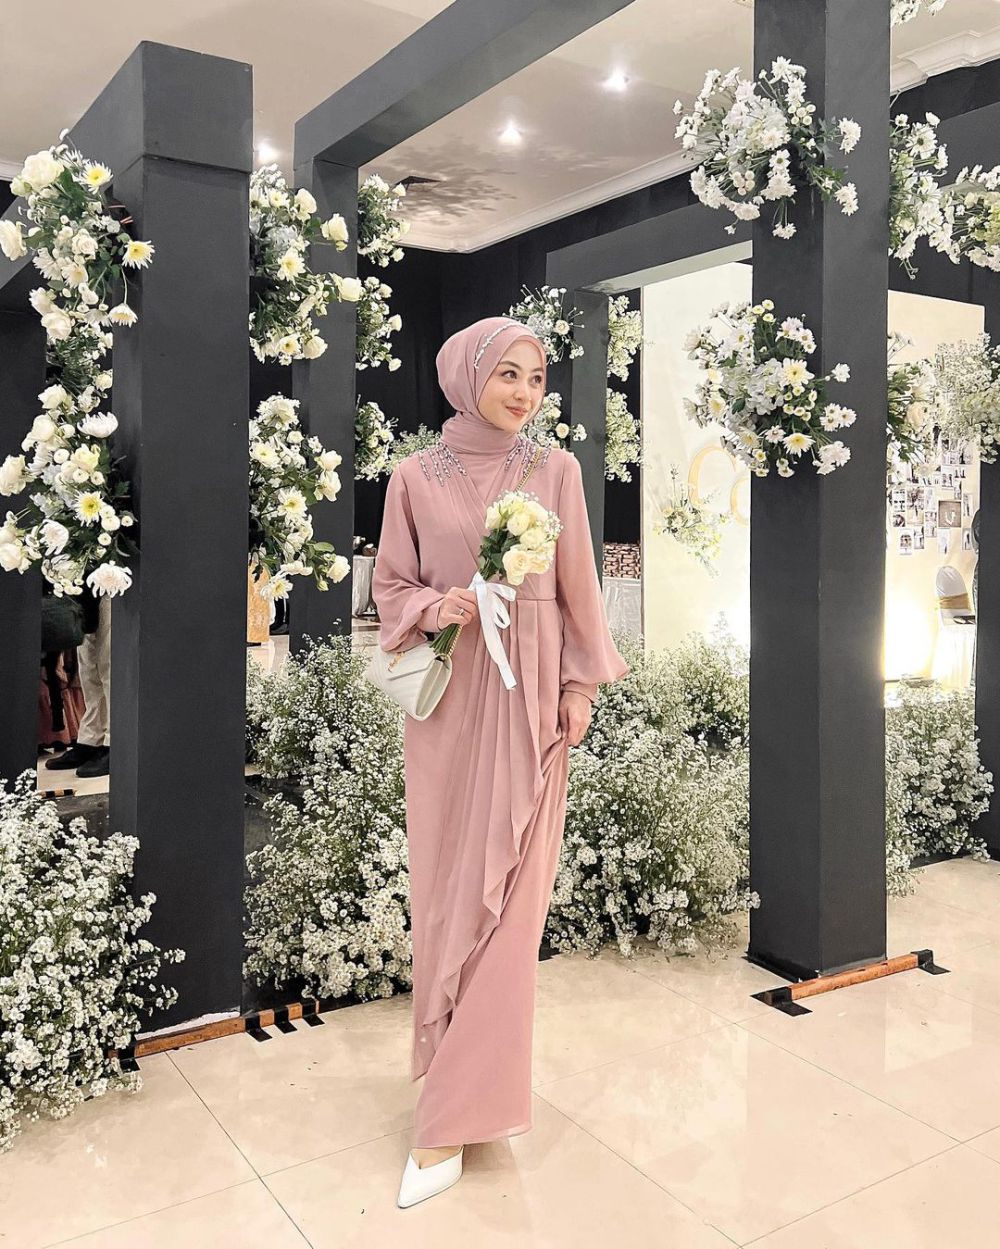 11 Inspirasi Model Dress Bridesmaid Hijab Nuansa Pink, Elegan!